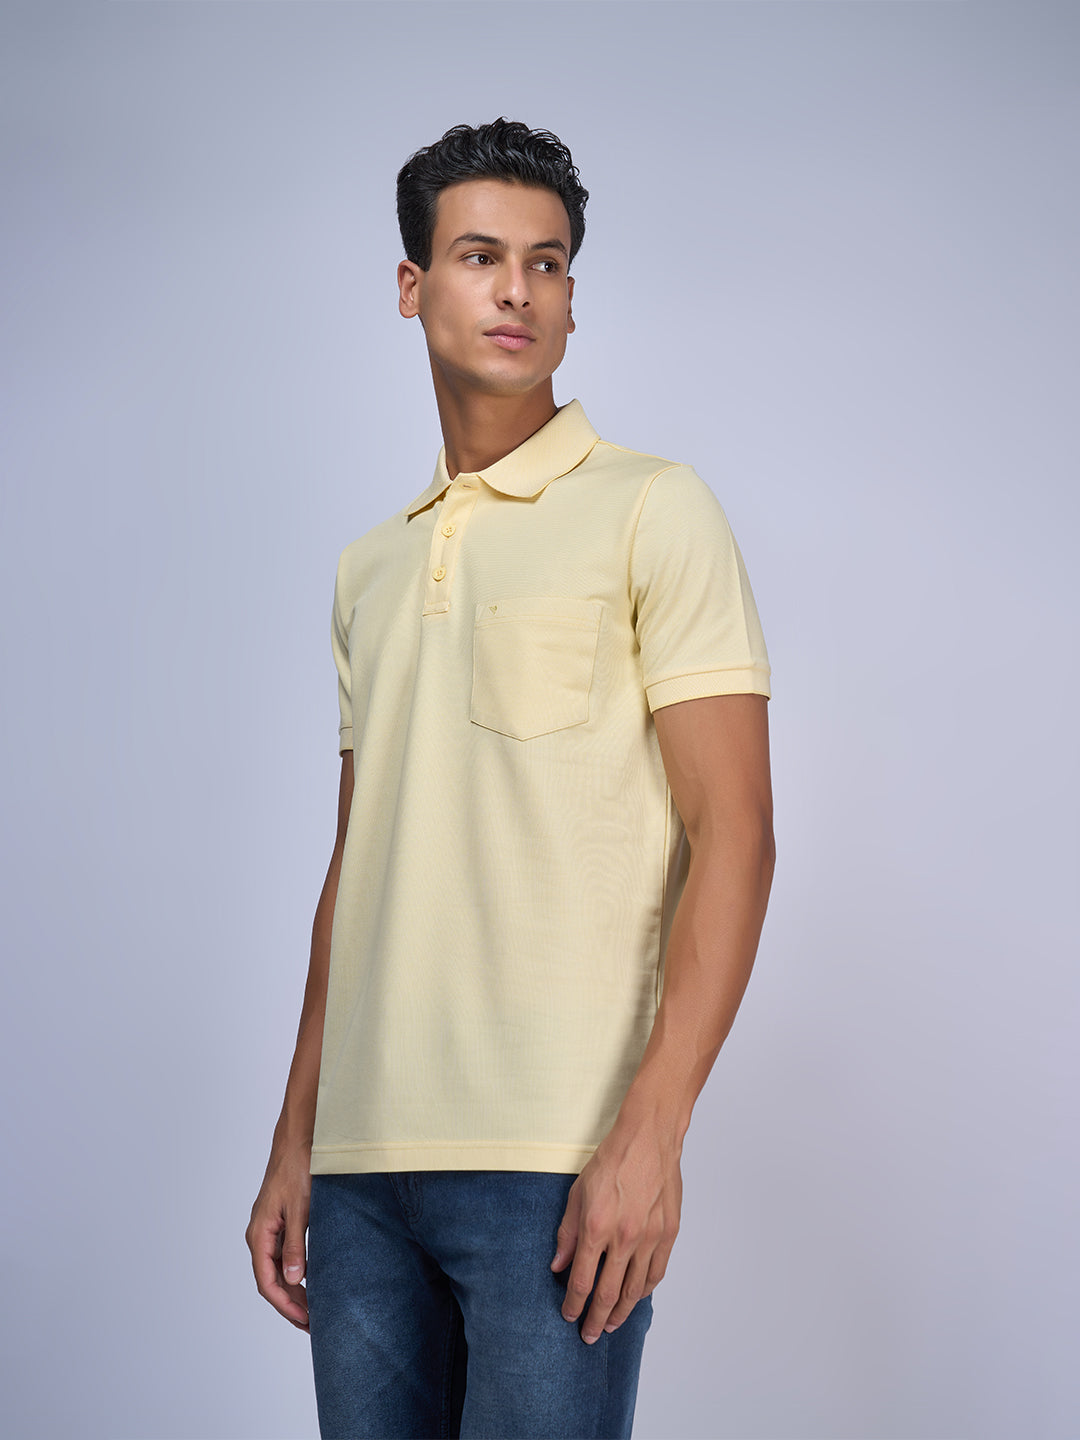 Mens Smart Fit Expert Polo Light Beige color Chest Pocket T shirt-EP19